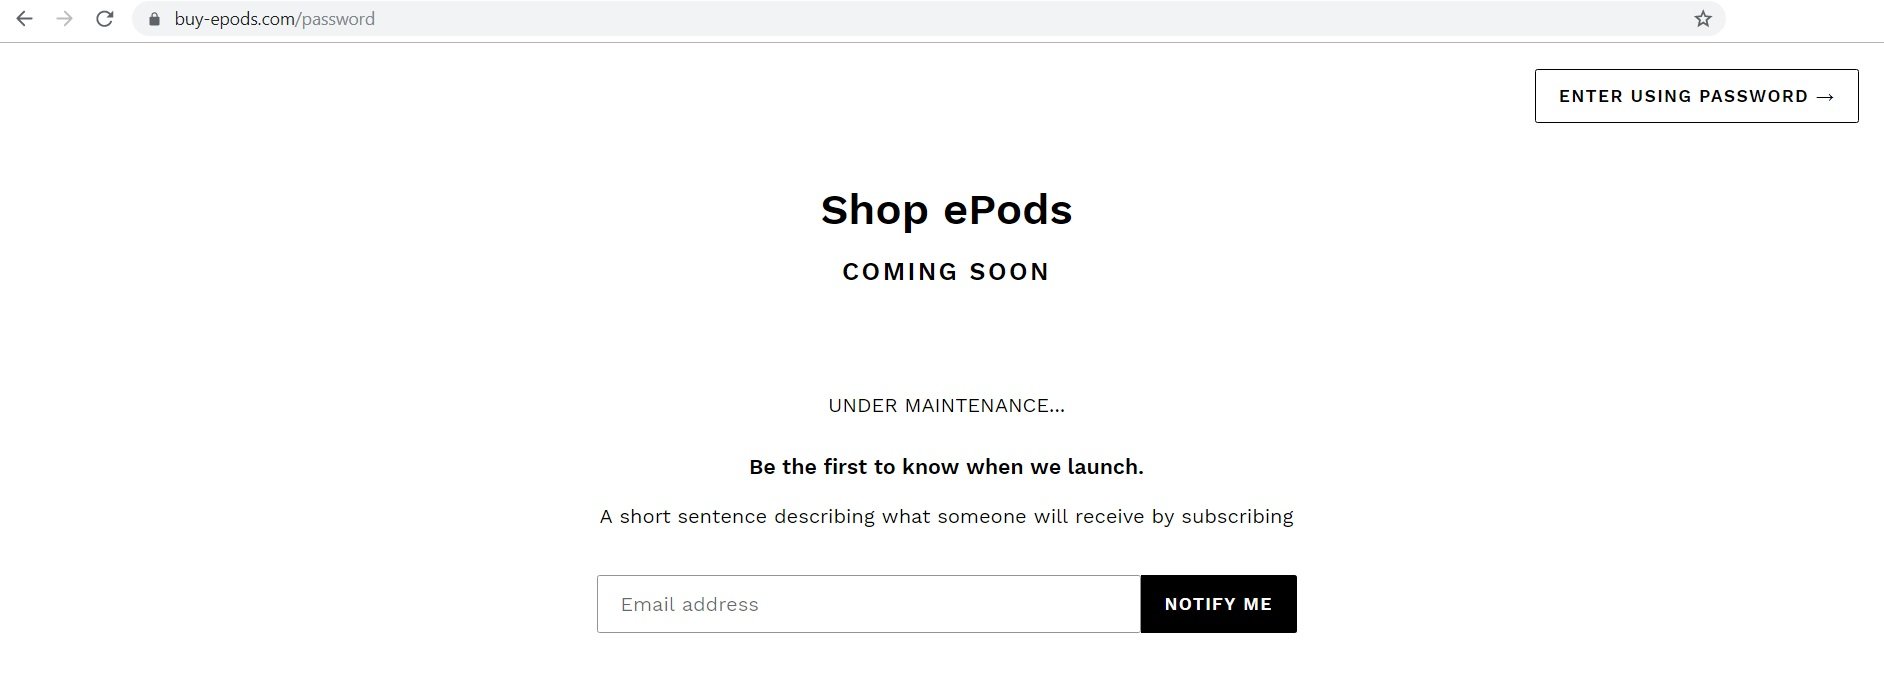 Shop ePods at buy-epods.com